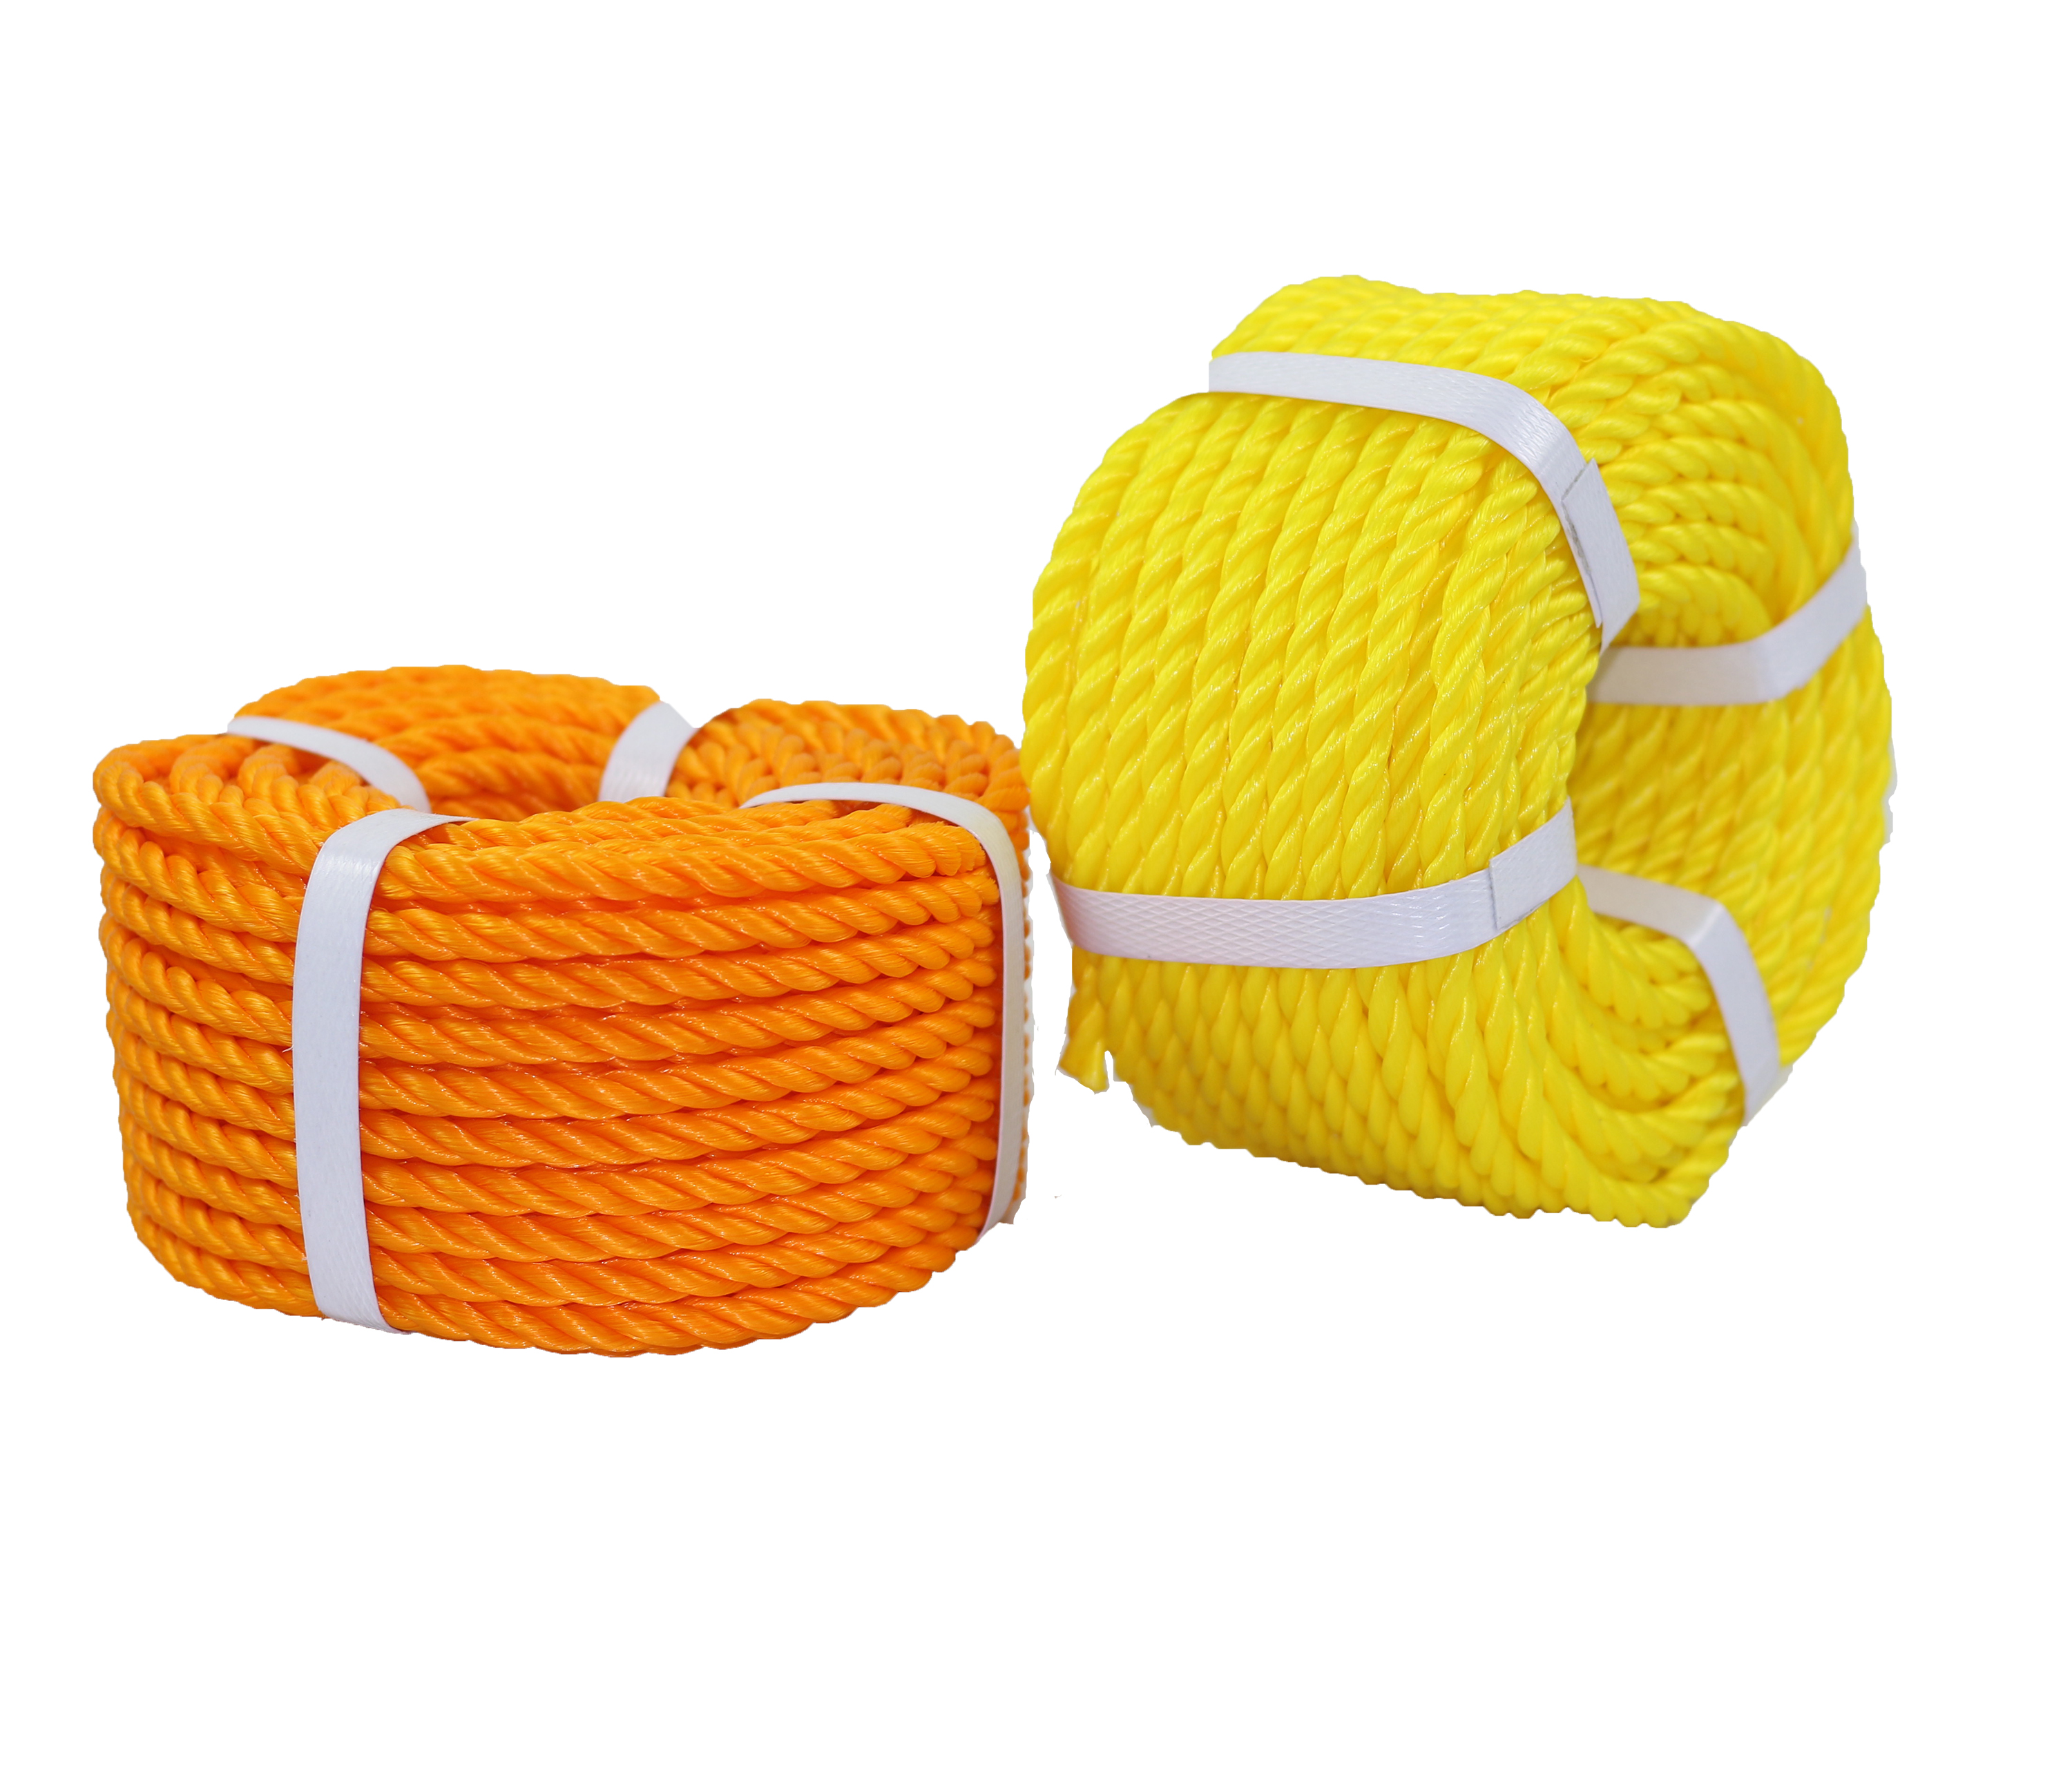 Yellow and orange PE